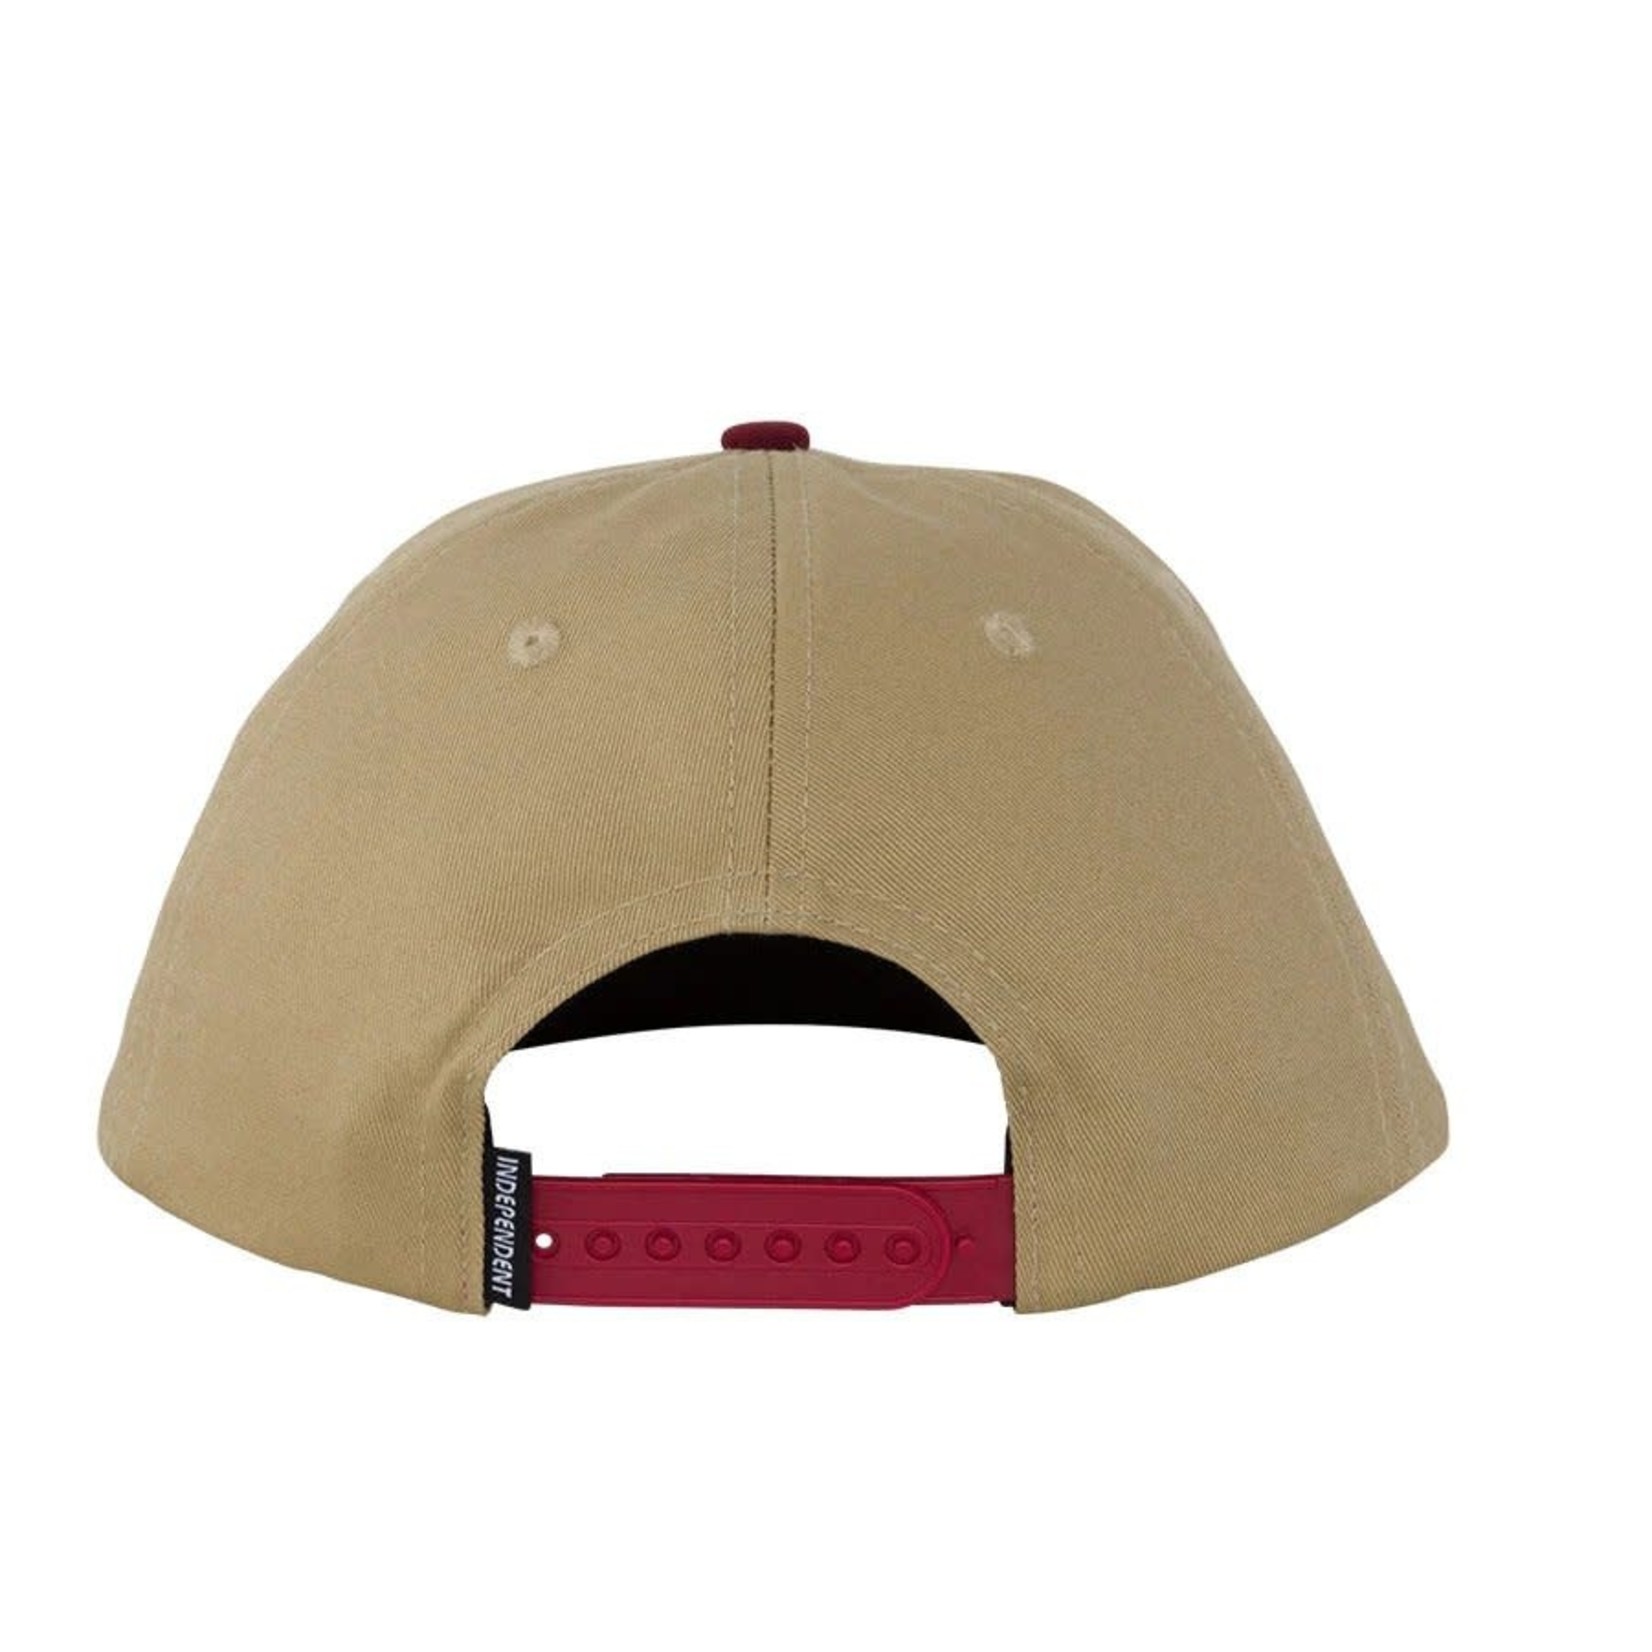 Independent Independent Groundwork Snapback Mid Profile Hat - Tan/Burgundy